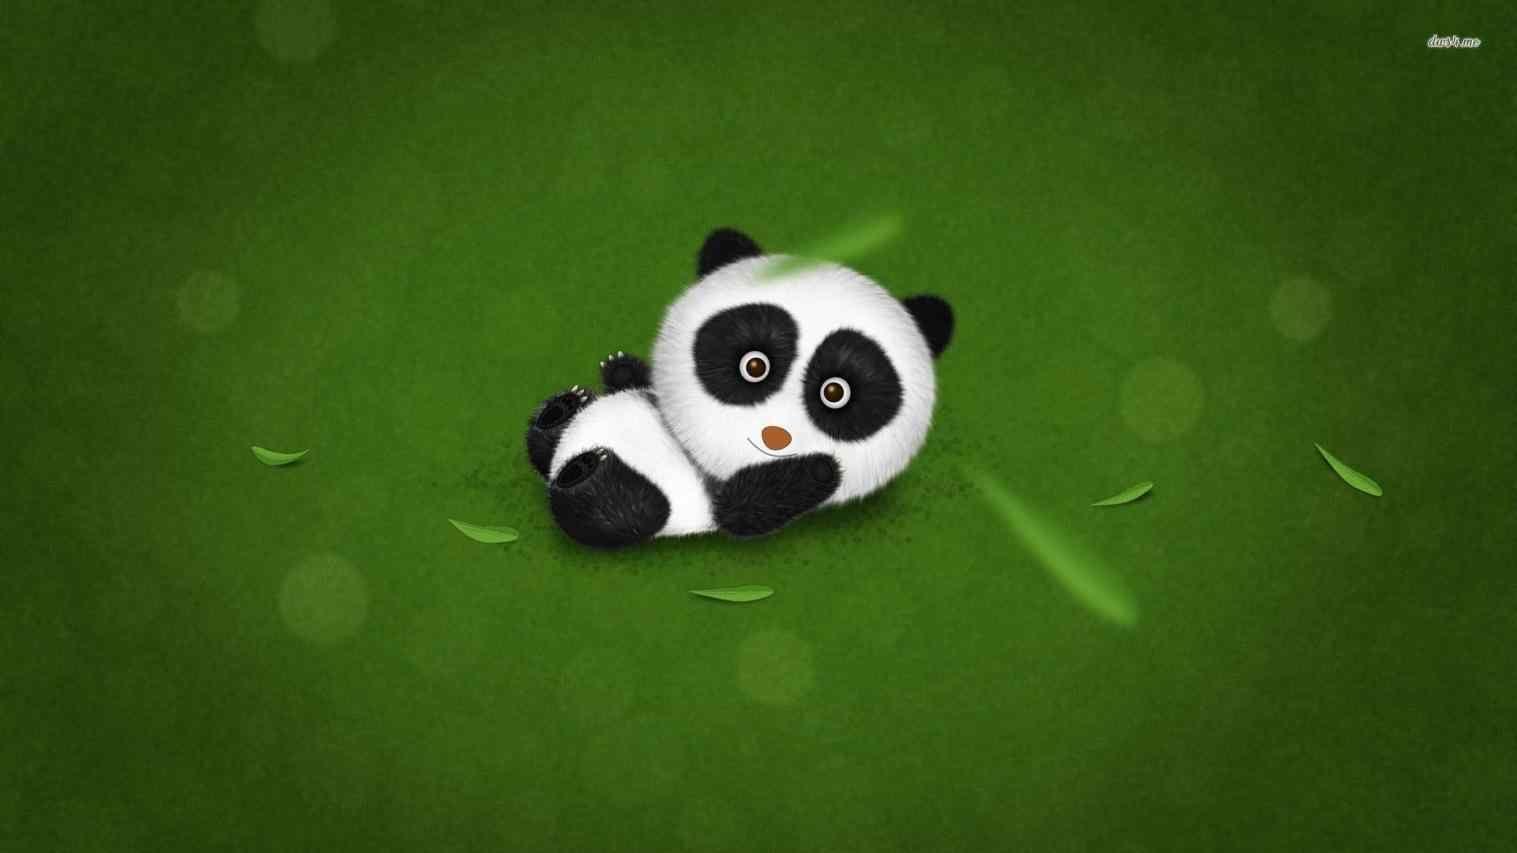 desktops wallpapers anime pandas